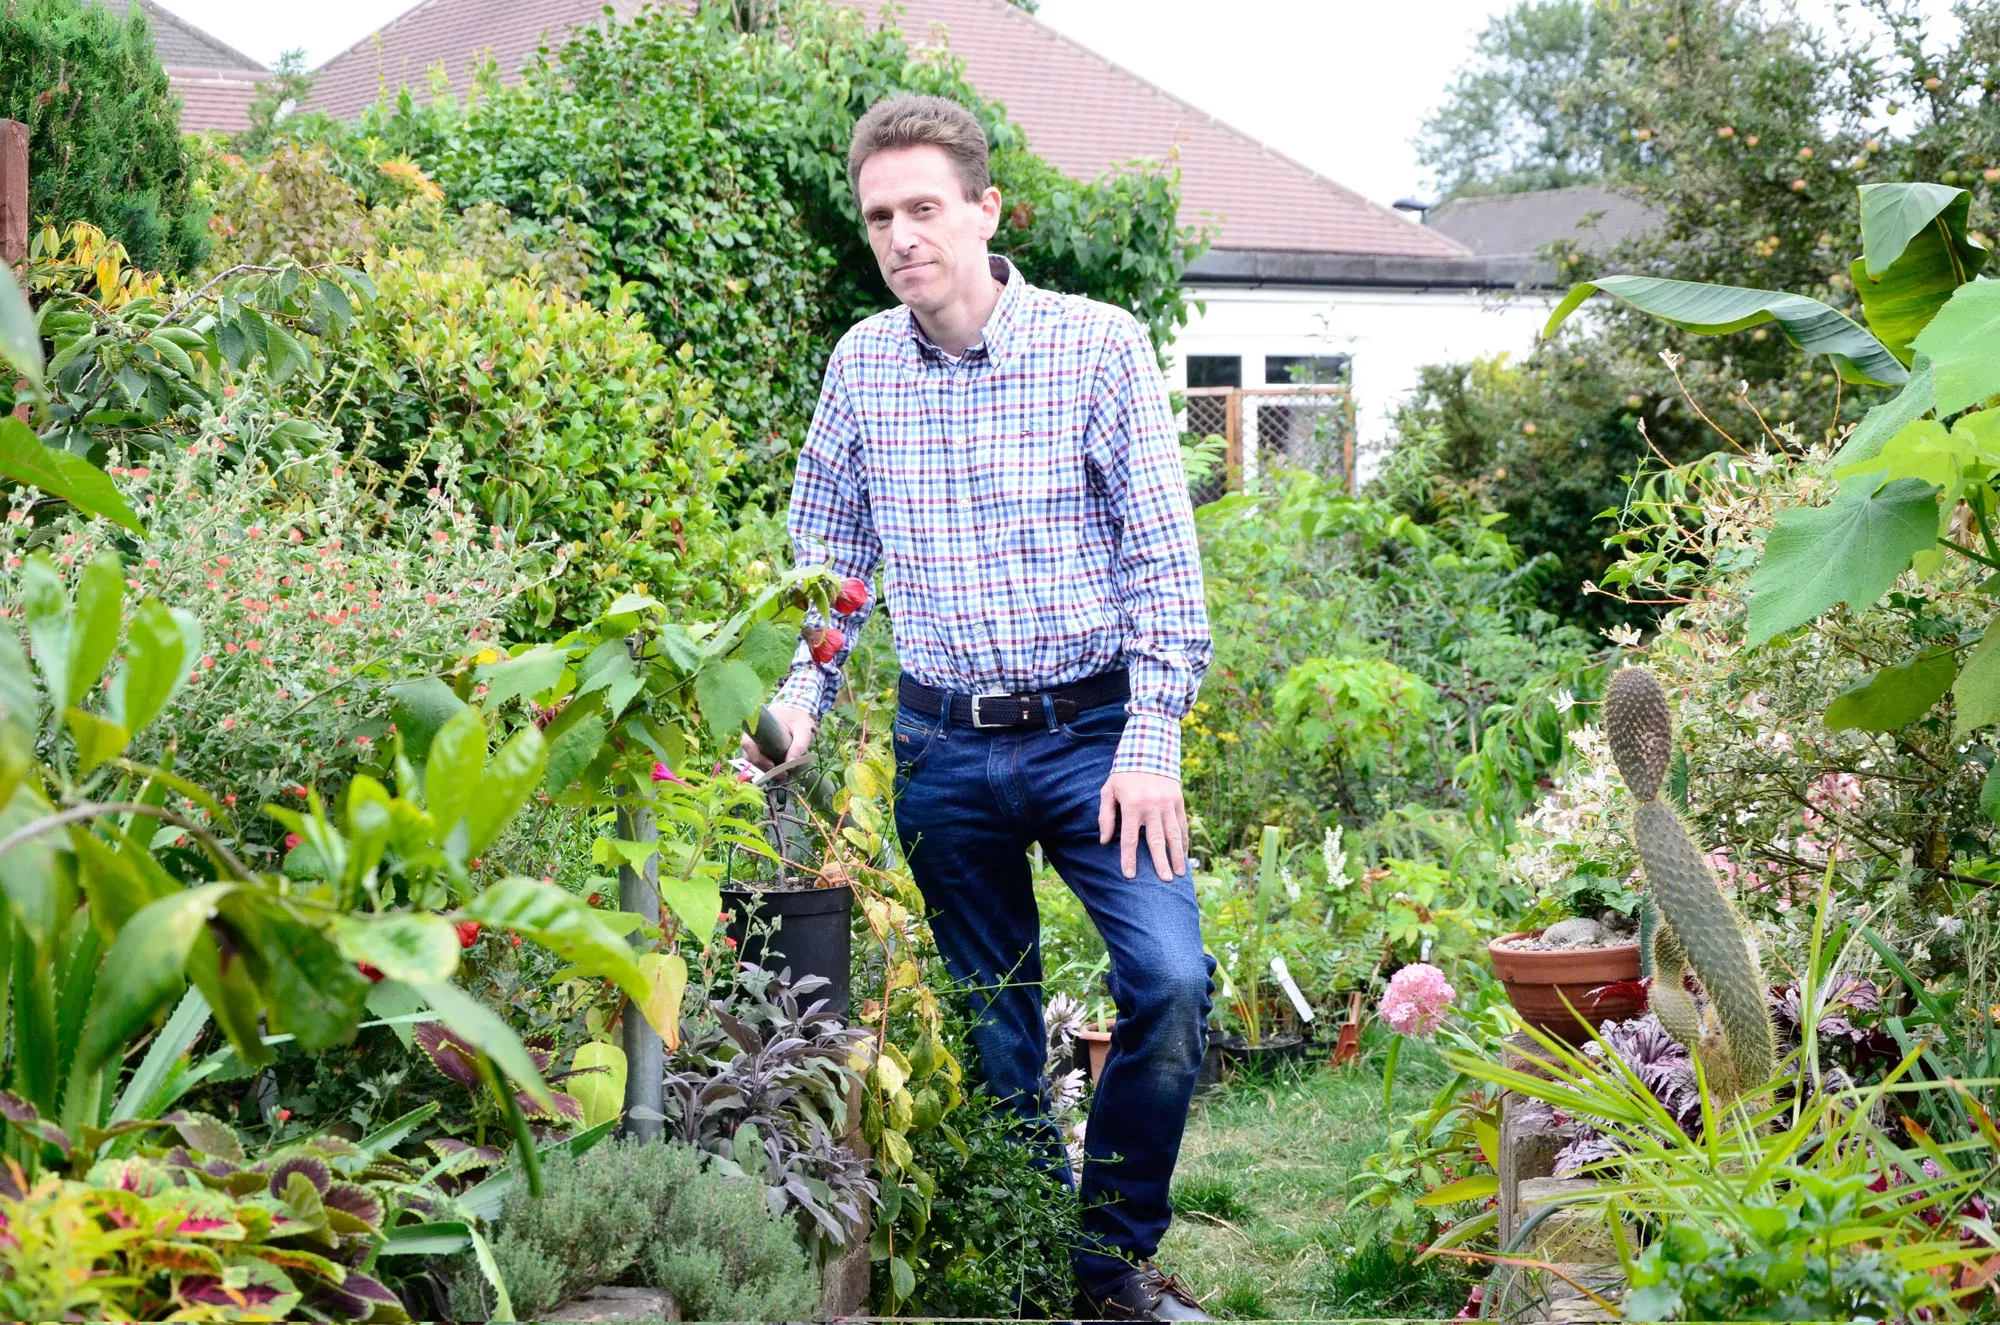 Rafael standing in a garden